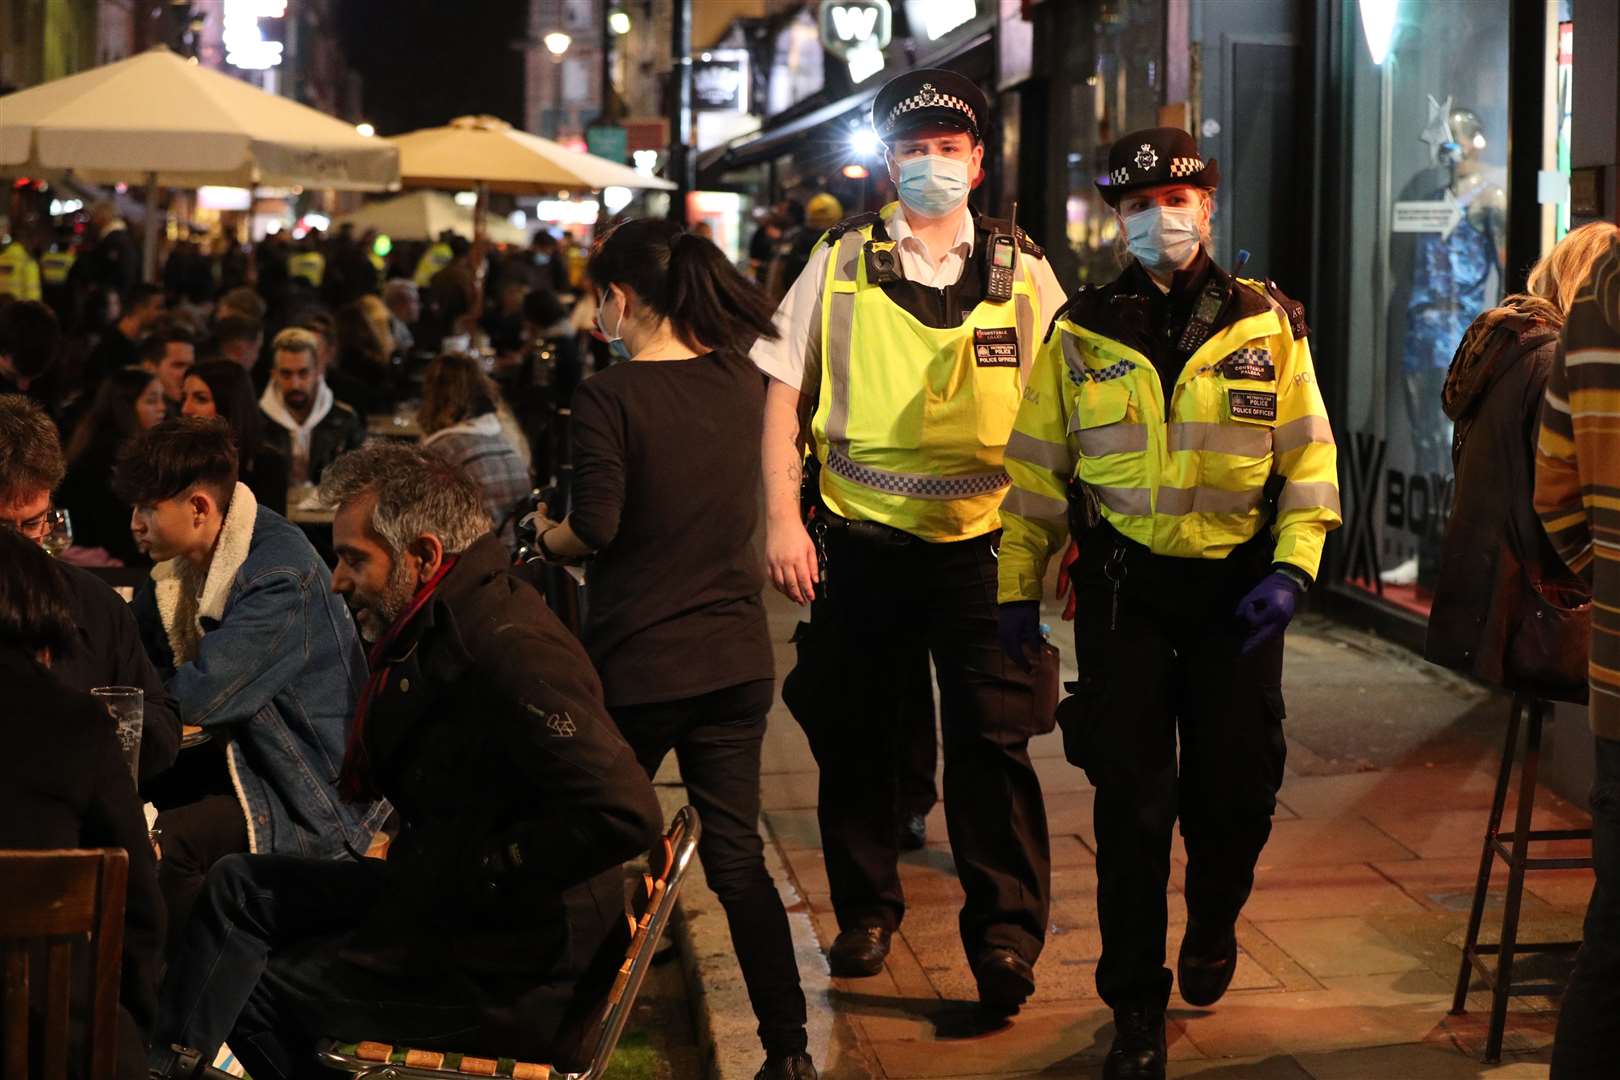 Police presence in Old Compton Street, London, on Friday night (Jonathan Brady/PA)